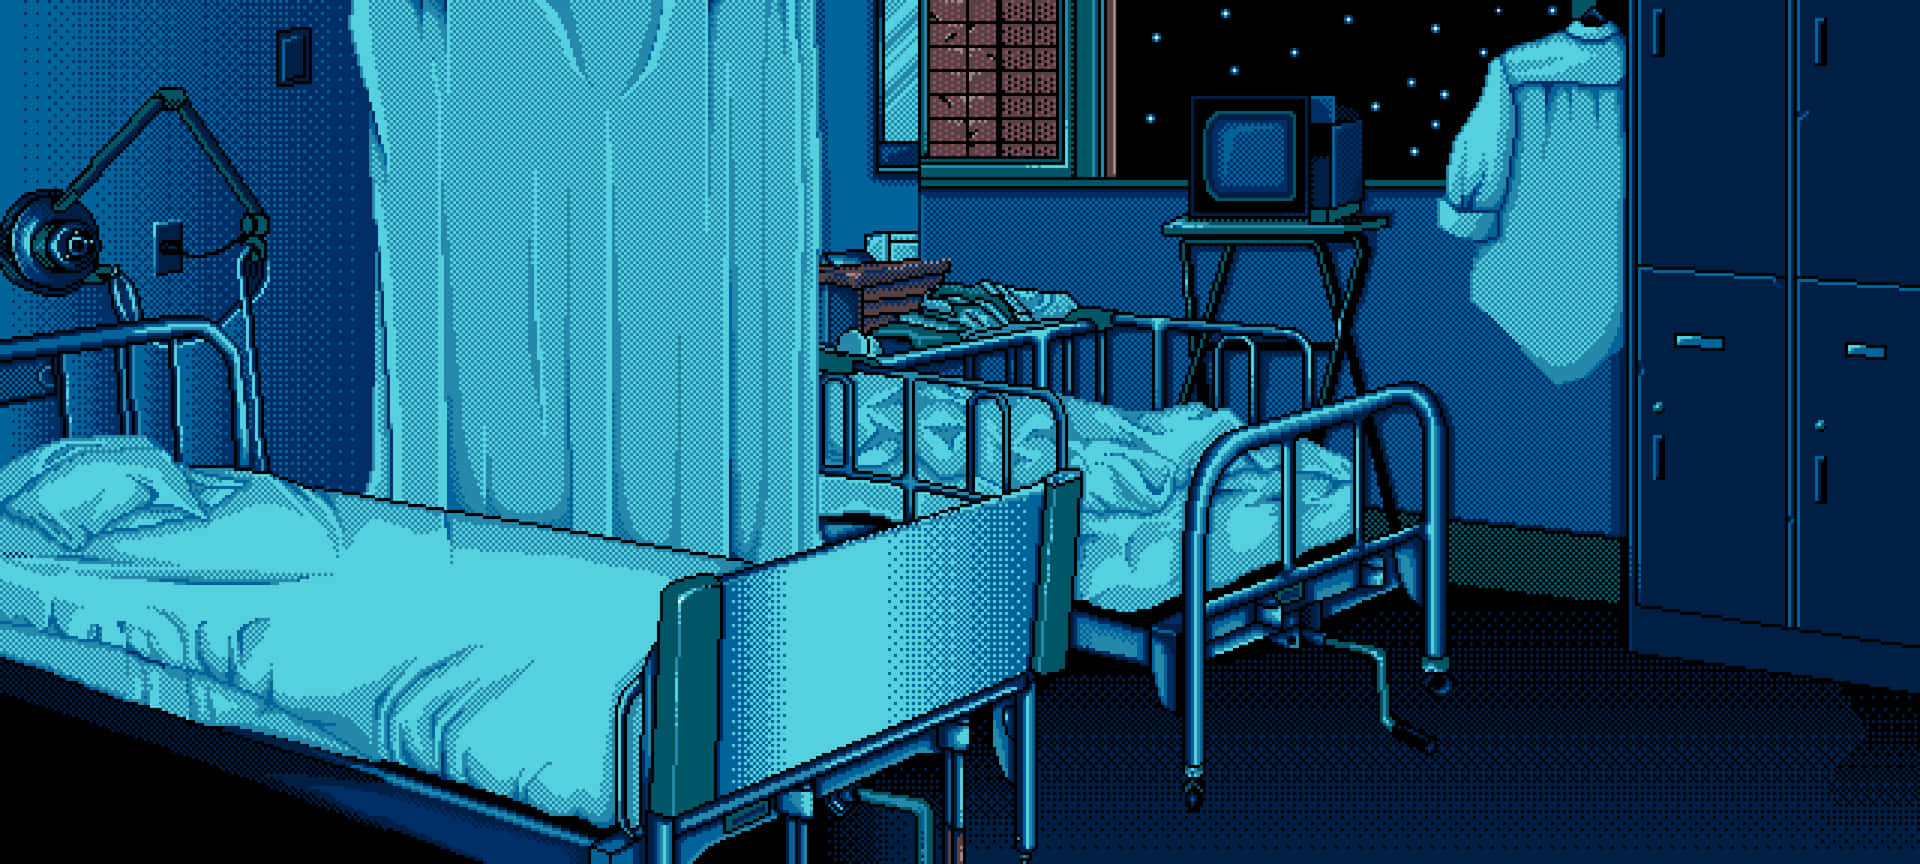 Retro Pixel Art Hospital Bed With Night Sky Wallpaper